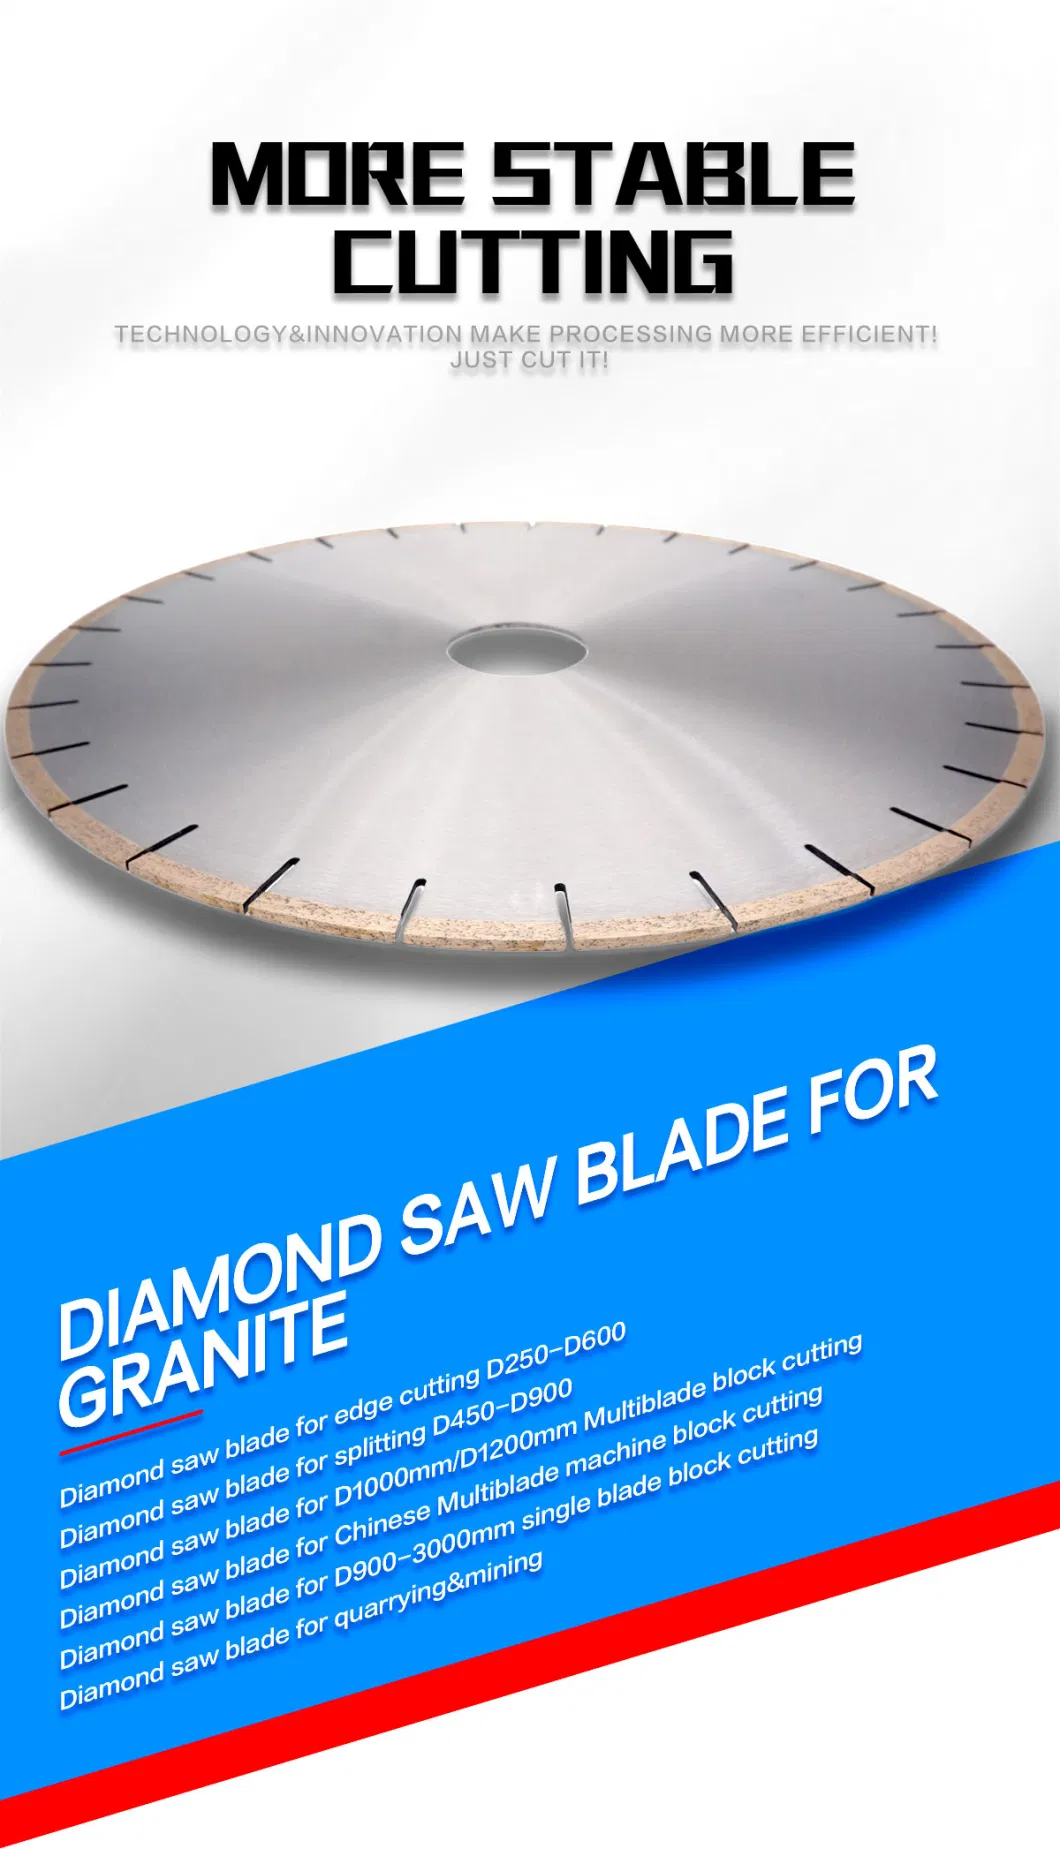 Hig Efficiency Diamond Blade Measuring Tool on Quick Cut Saw